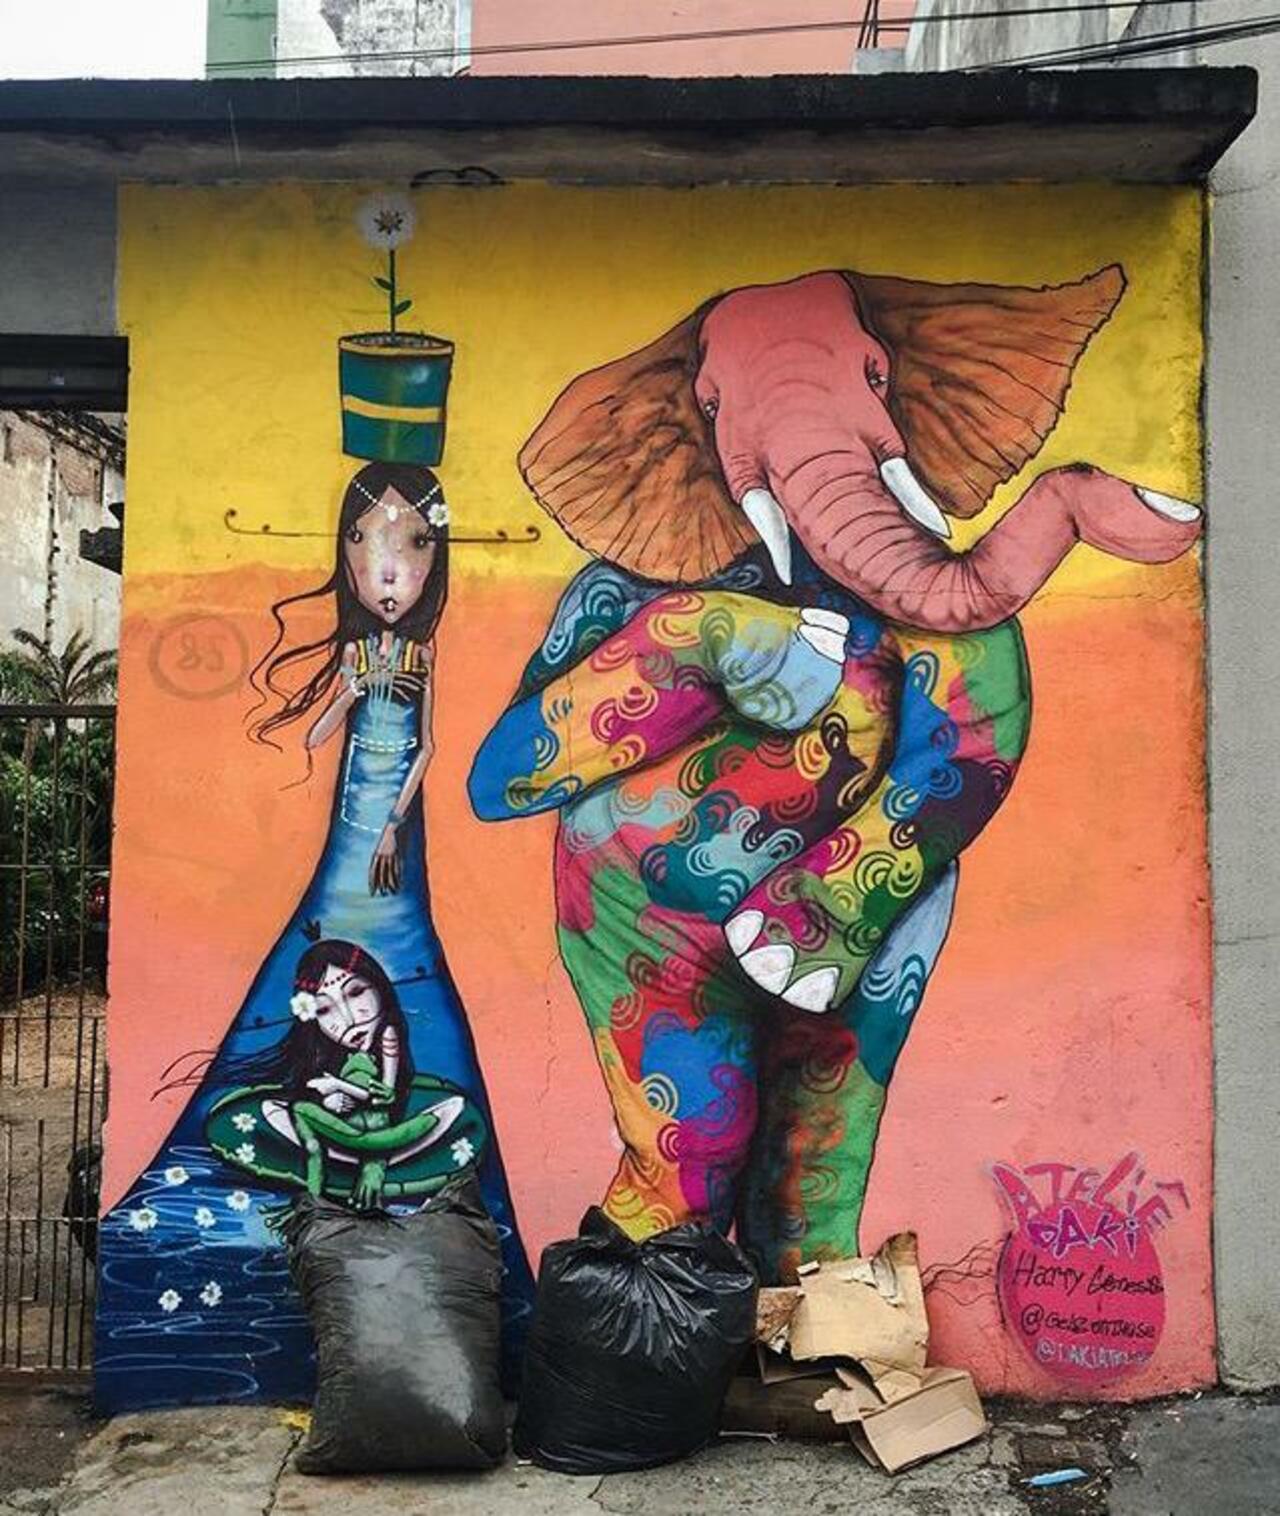 Street Art by Harry Geneis & Gelson in São Paulo #art #mural #graffiti #streetart http://t.co/SlLbhuMZfD … … … http://twitter.com/GoogleStreetArt/status/648016473831645184/photo/1/large?utm_source=fb&utm_medium=fb&utm_campaign=charlesjackso14&utm_content=648021461467316224